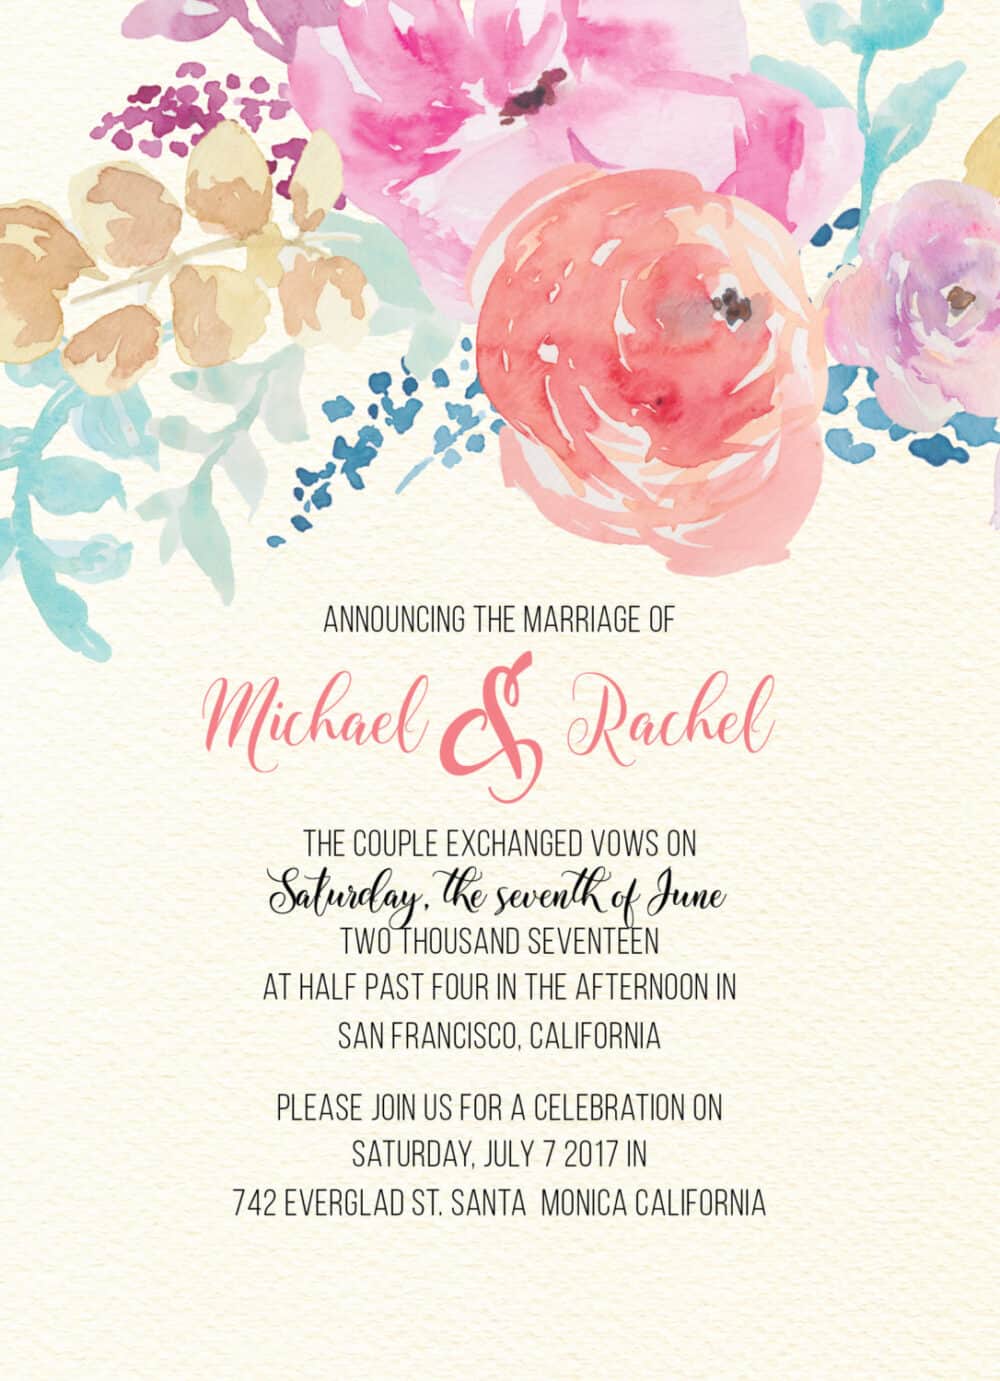 Elopement Announcement Cards, Vintage and Floral Elopement Cards elopement25